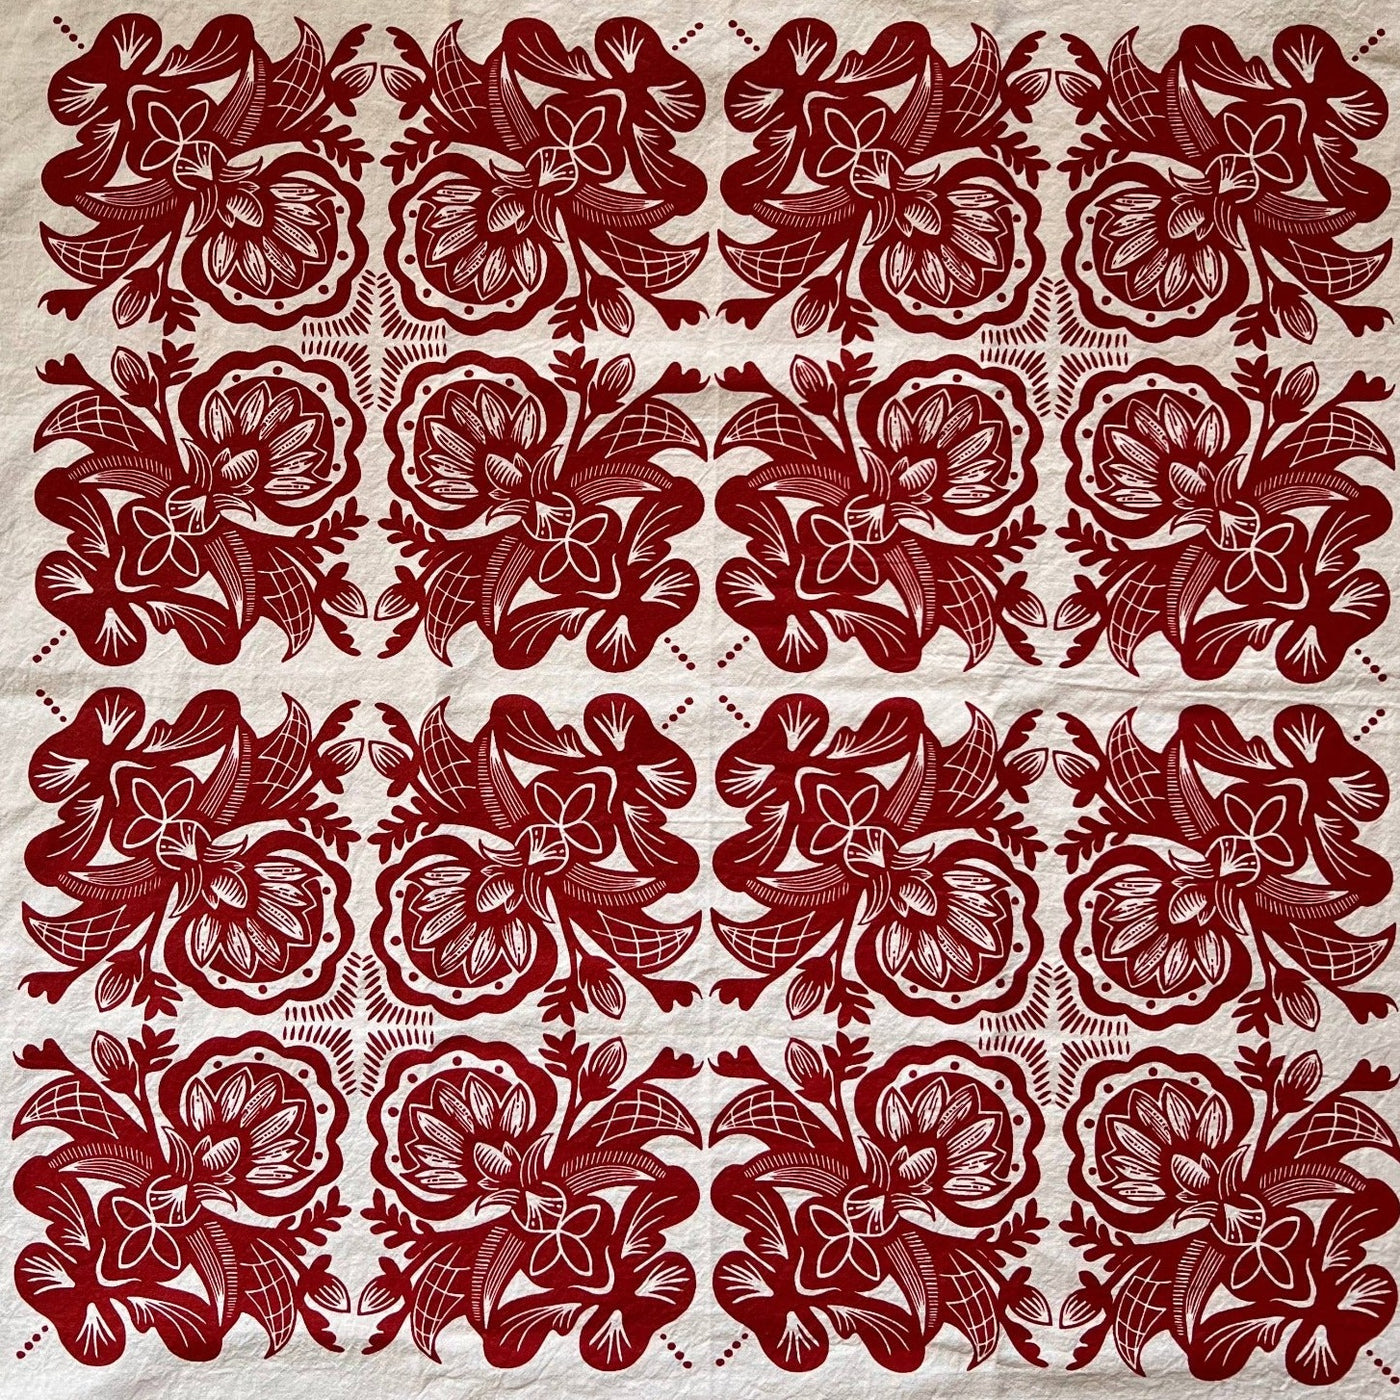 Follysome Prints - Rosemaling Cotton Tea Towel